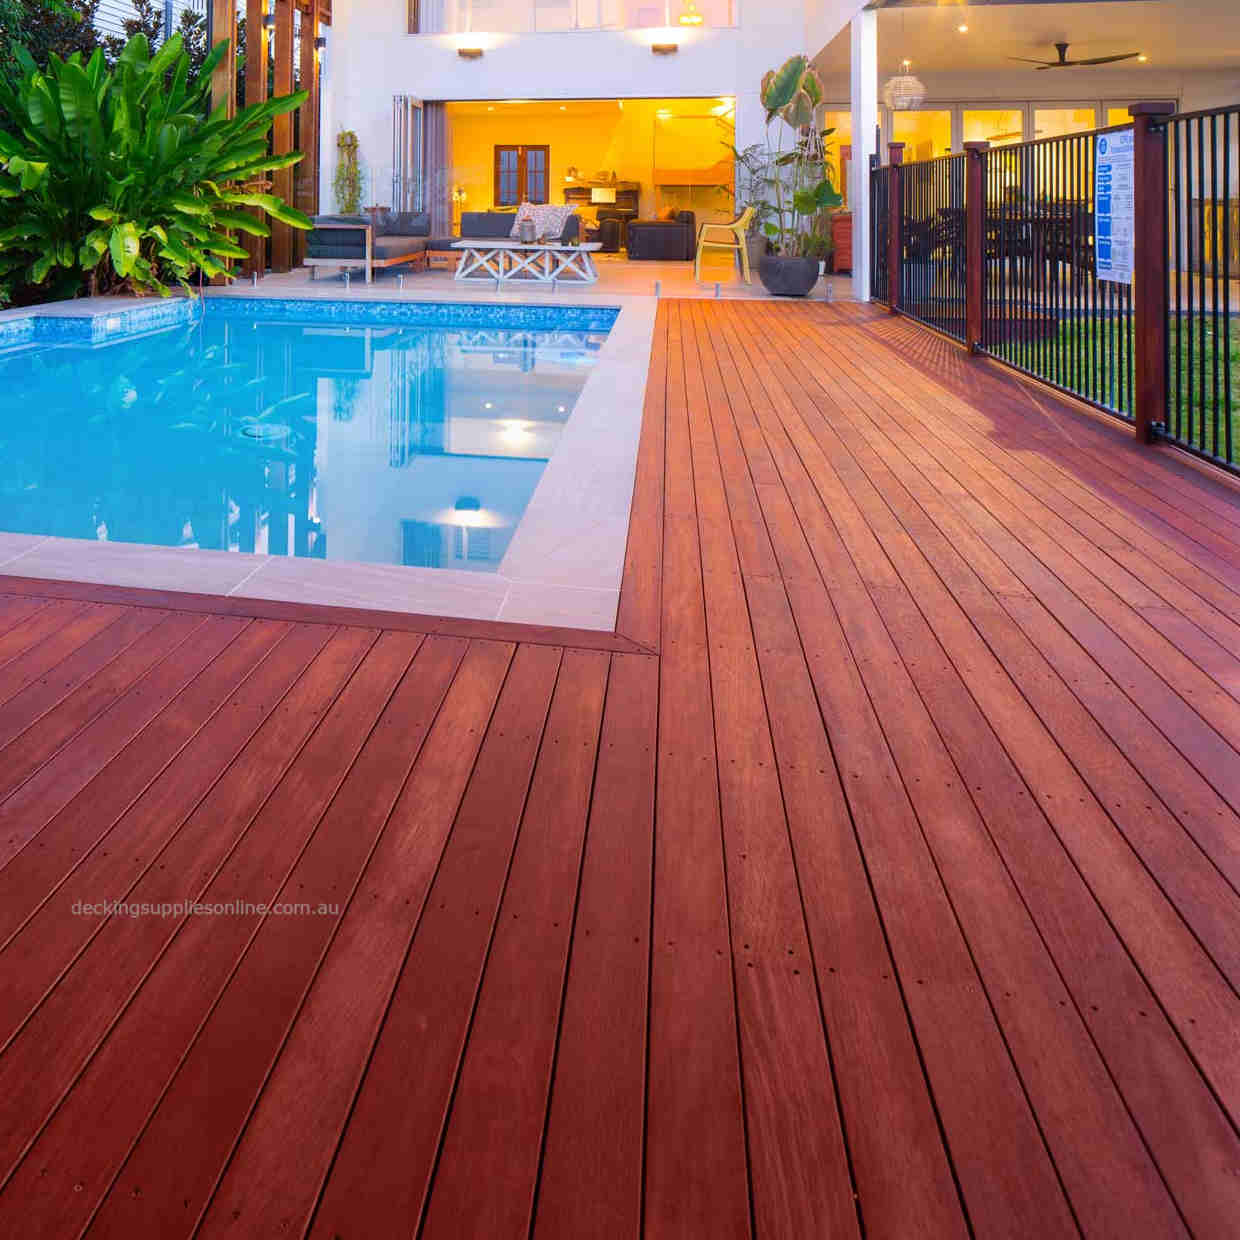 Wood deck and pool Australia